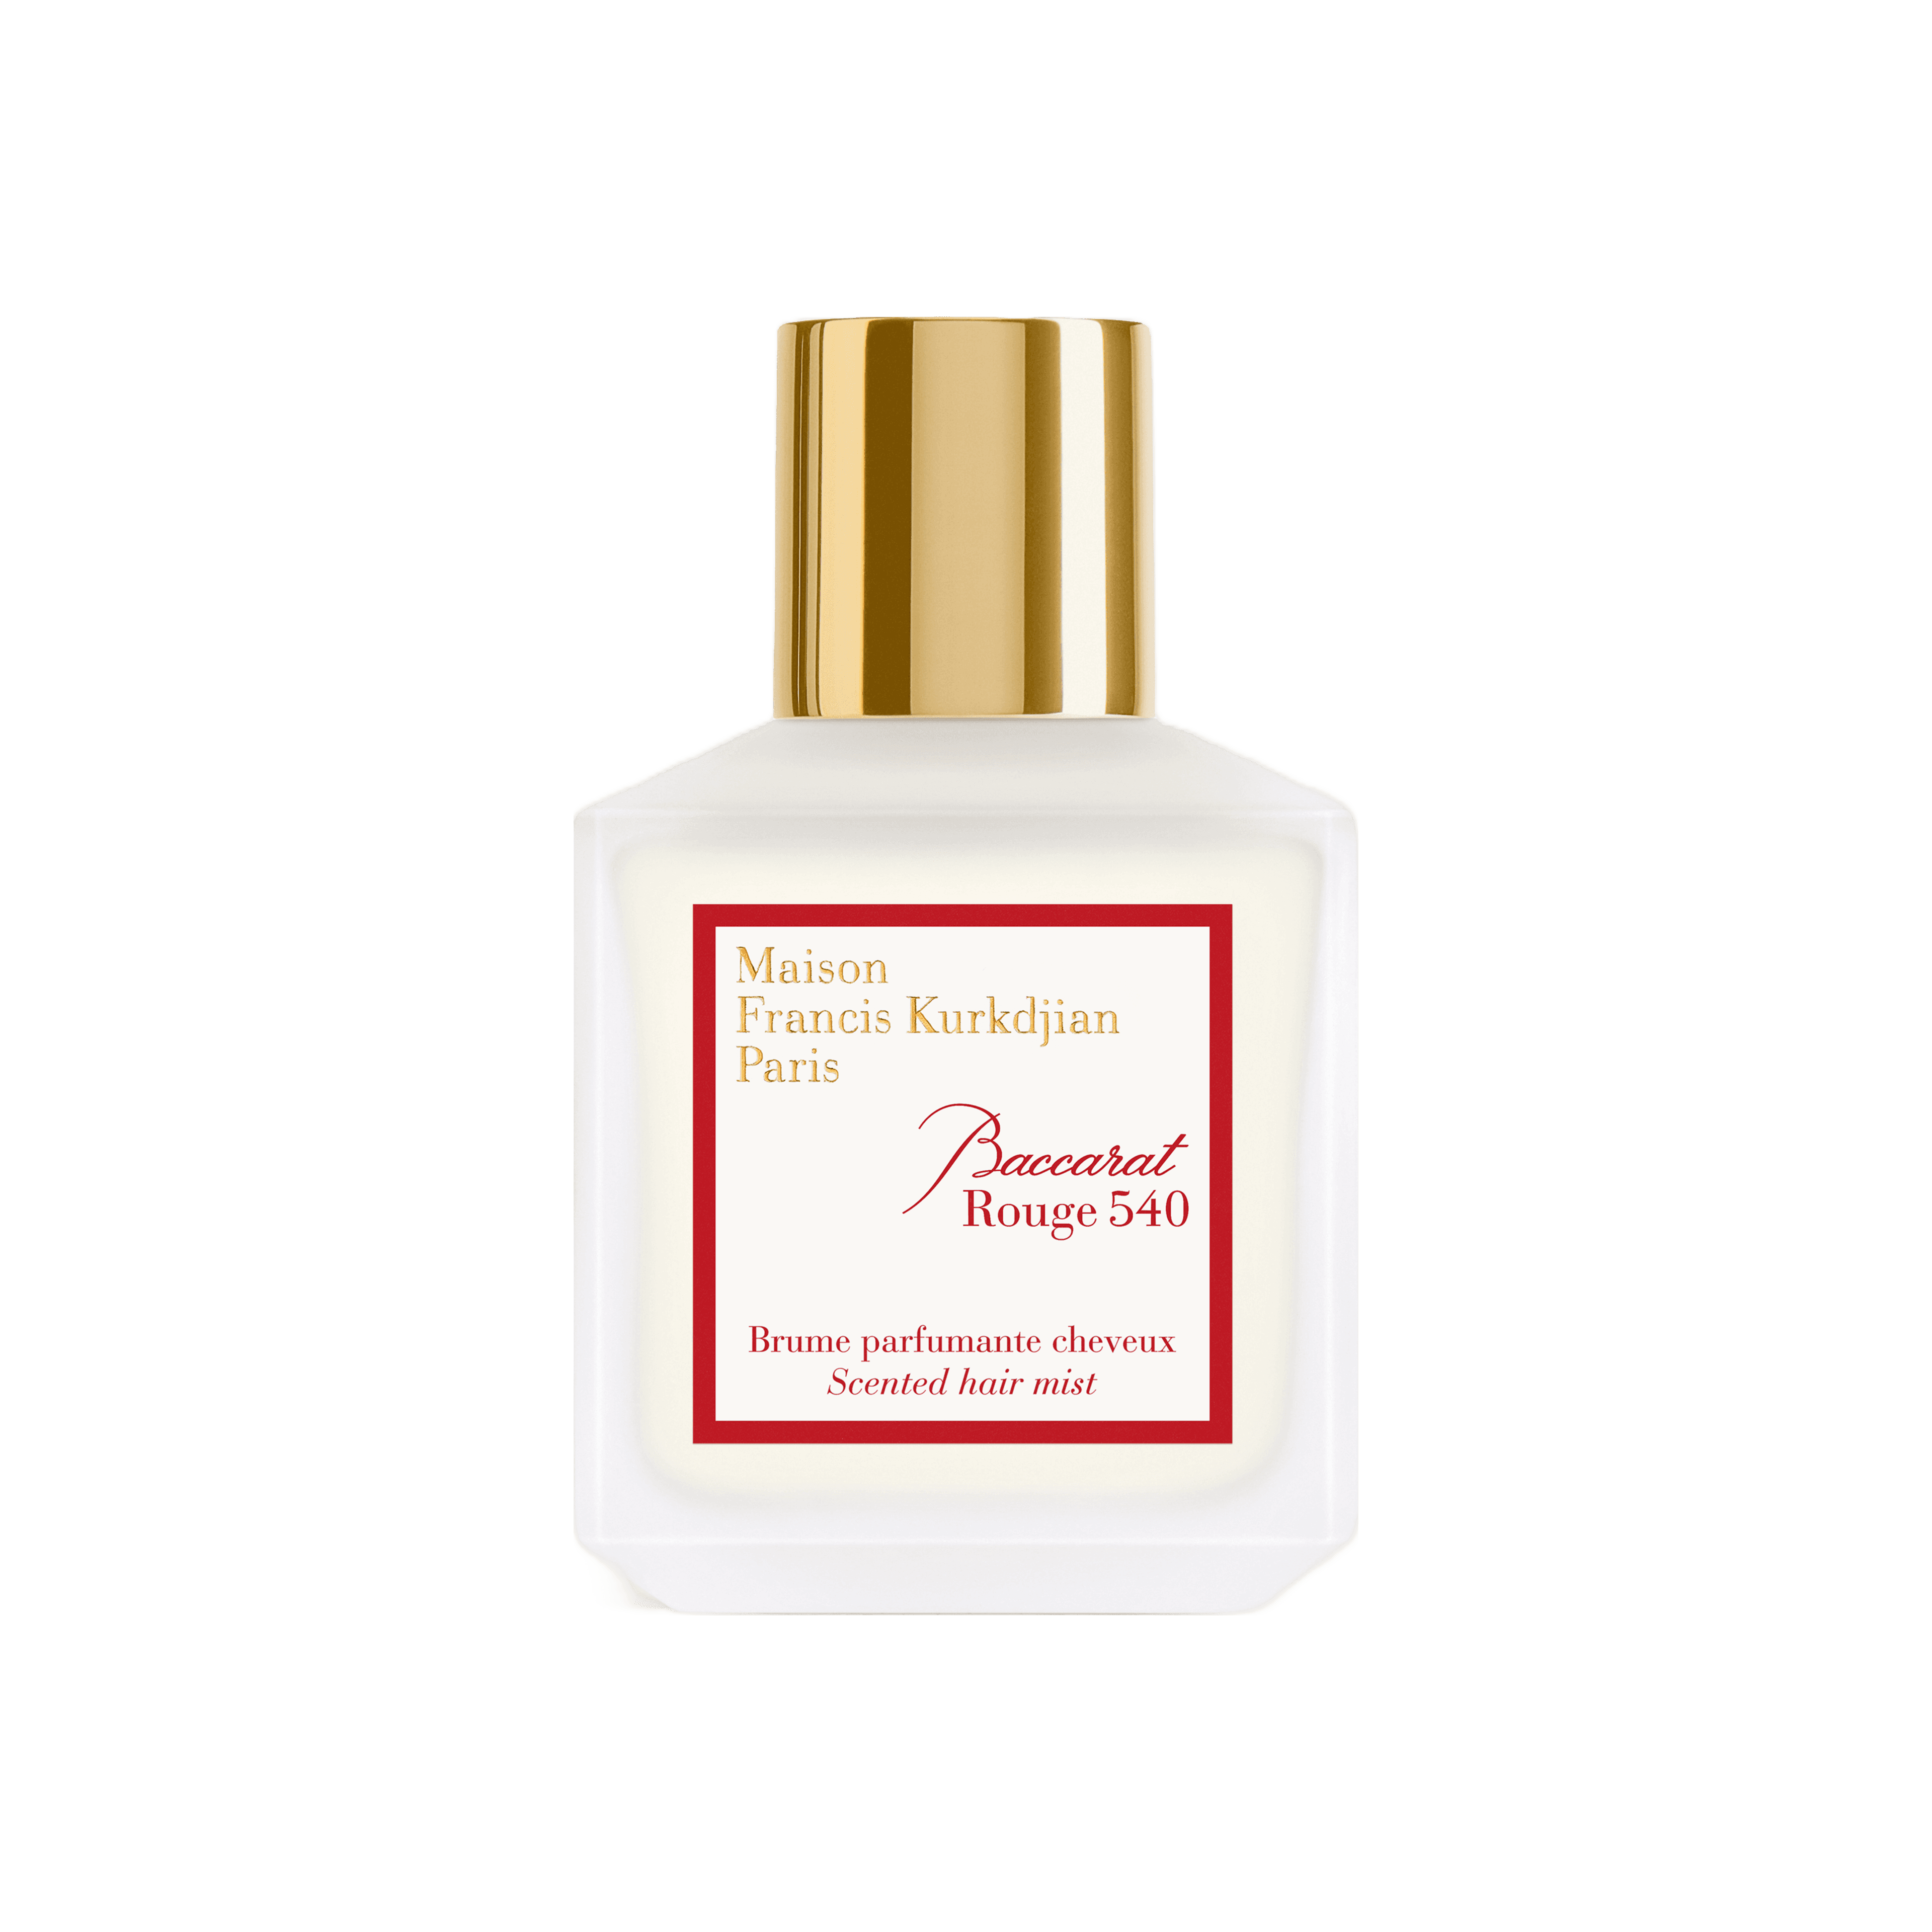 Maison Francis Kurkdjian - Baccarat Rouge 540 hair mist | Perfume Lounge